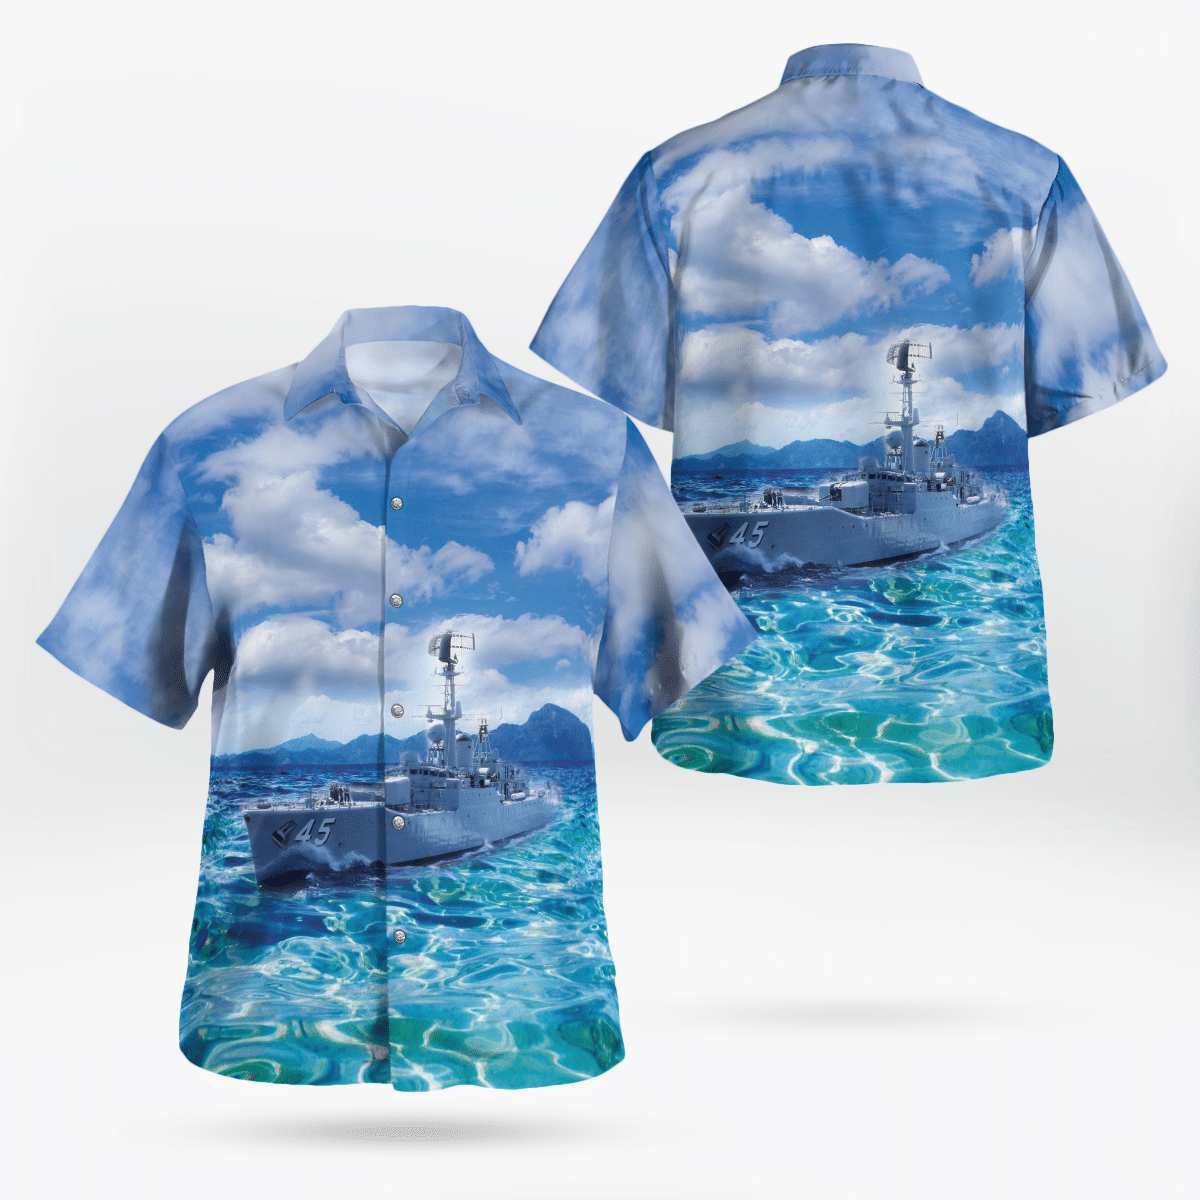 Summer so cool with top new hawaiian shirt below 52